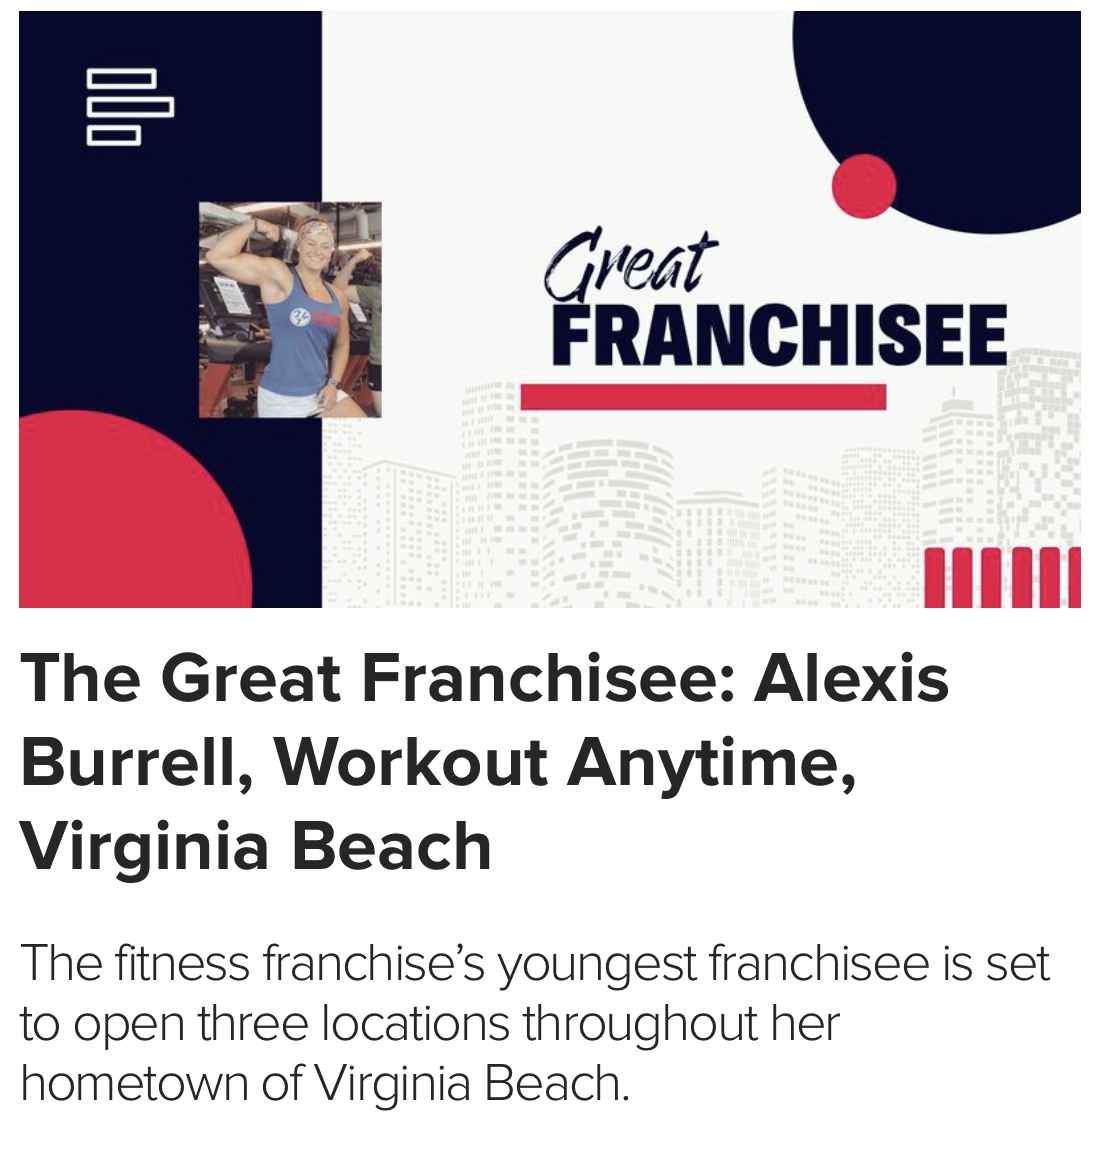 Virginia Beach gym 24/7